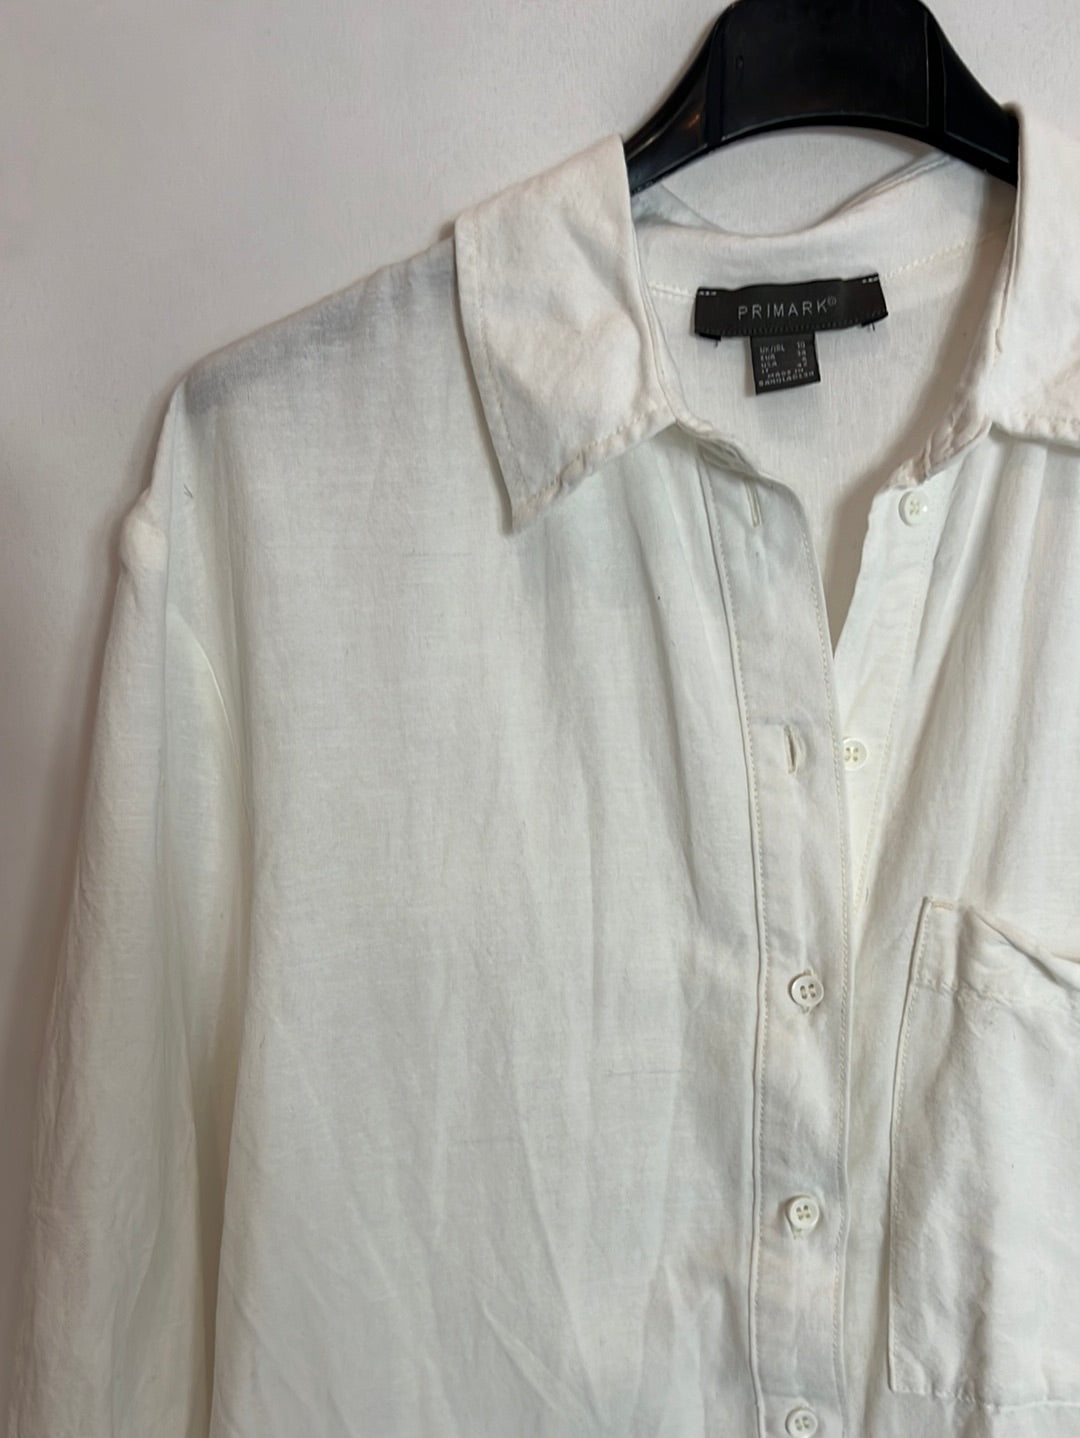 Intacto asqueroso Correo PRIMARK. Camisa blanca oxford T.38 – Hibuy market